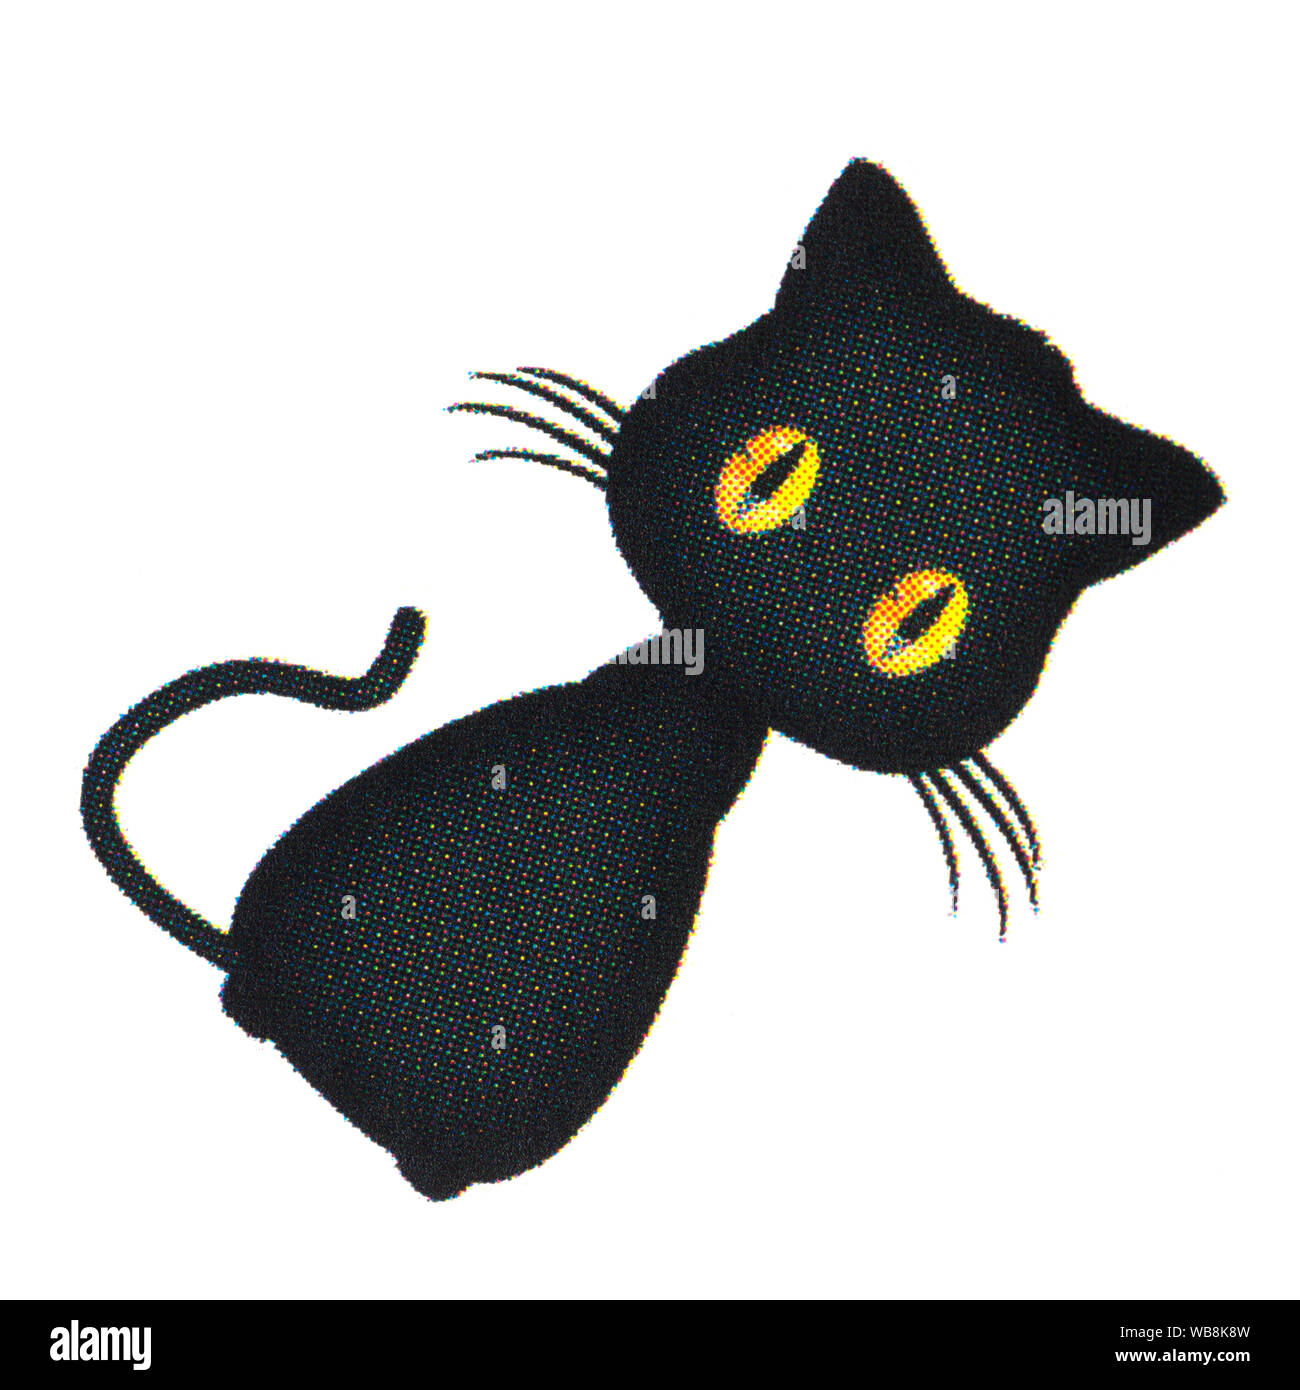 6,000+ Cat Emoji Stock Illustrations, Royalty-Free Vector Graphics & Clip  Art - iStock